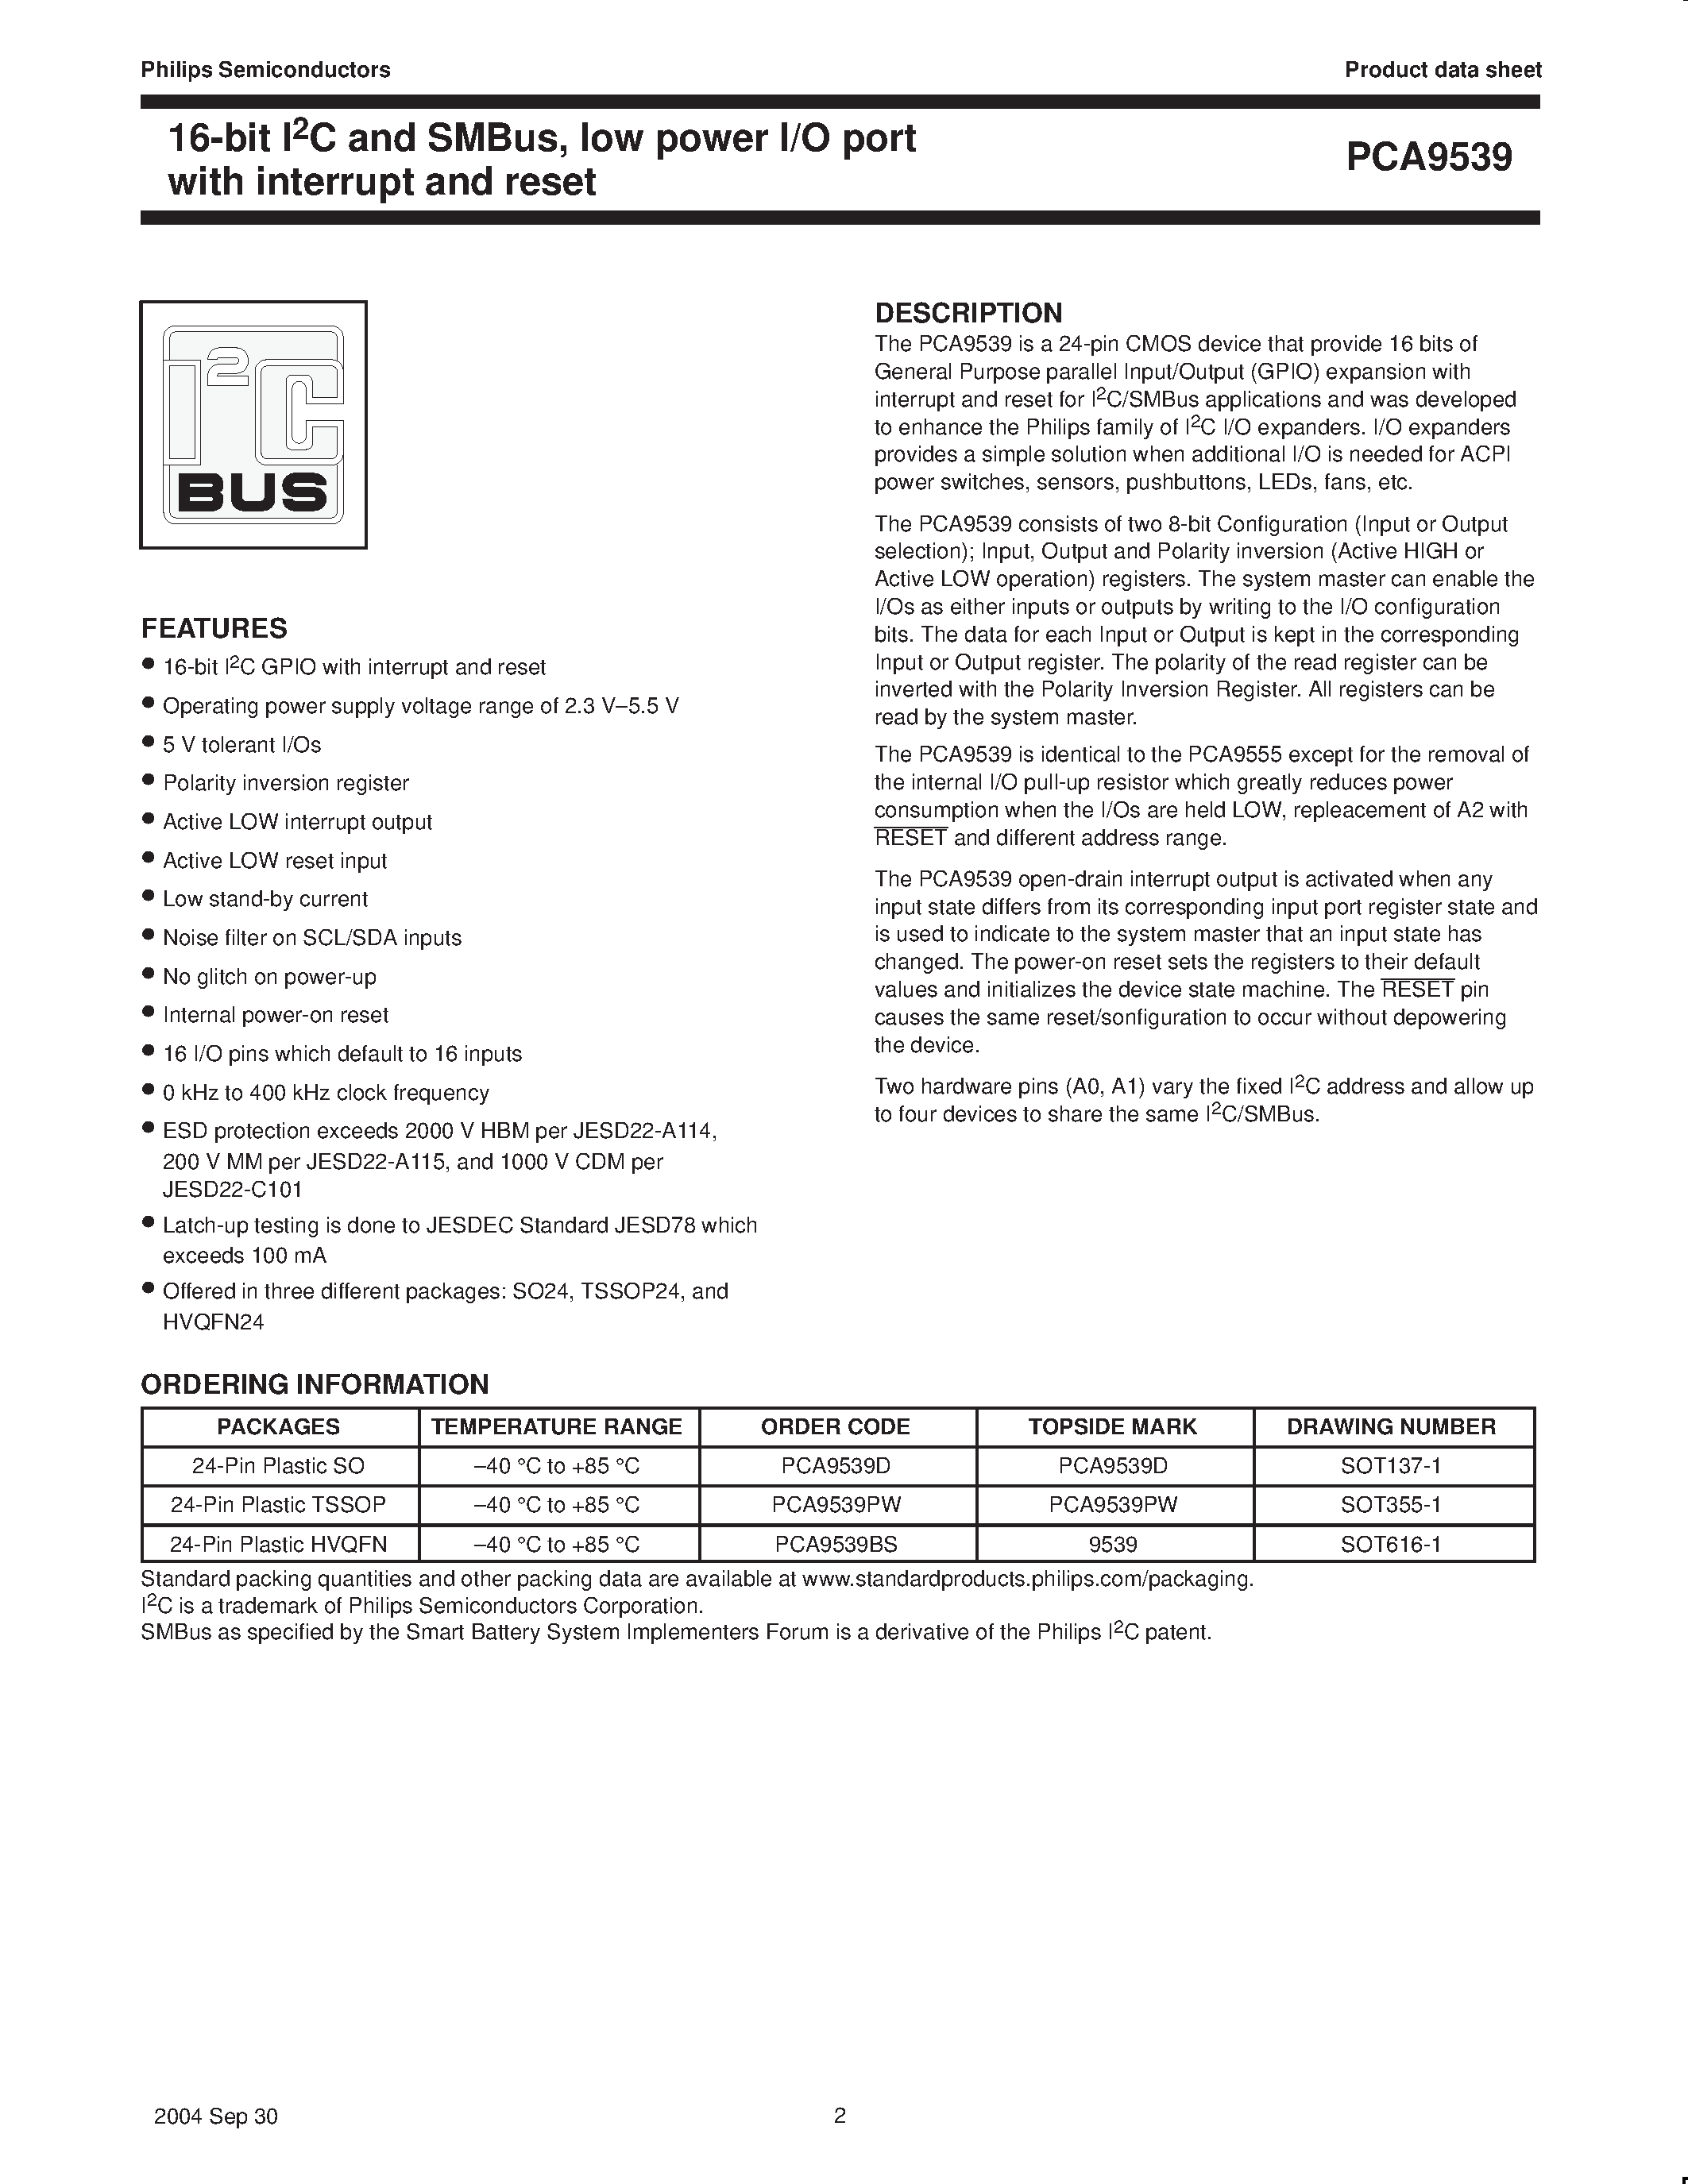 Datasheet PCA9539 - 16-bit I2C and SMBus low power I/O port page 2